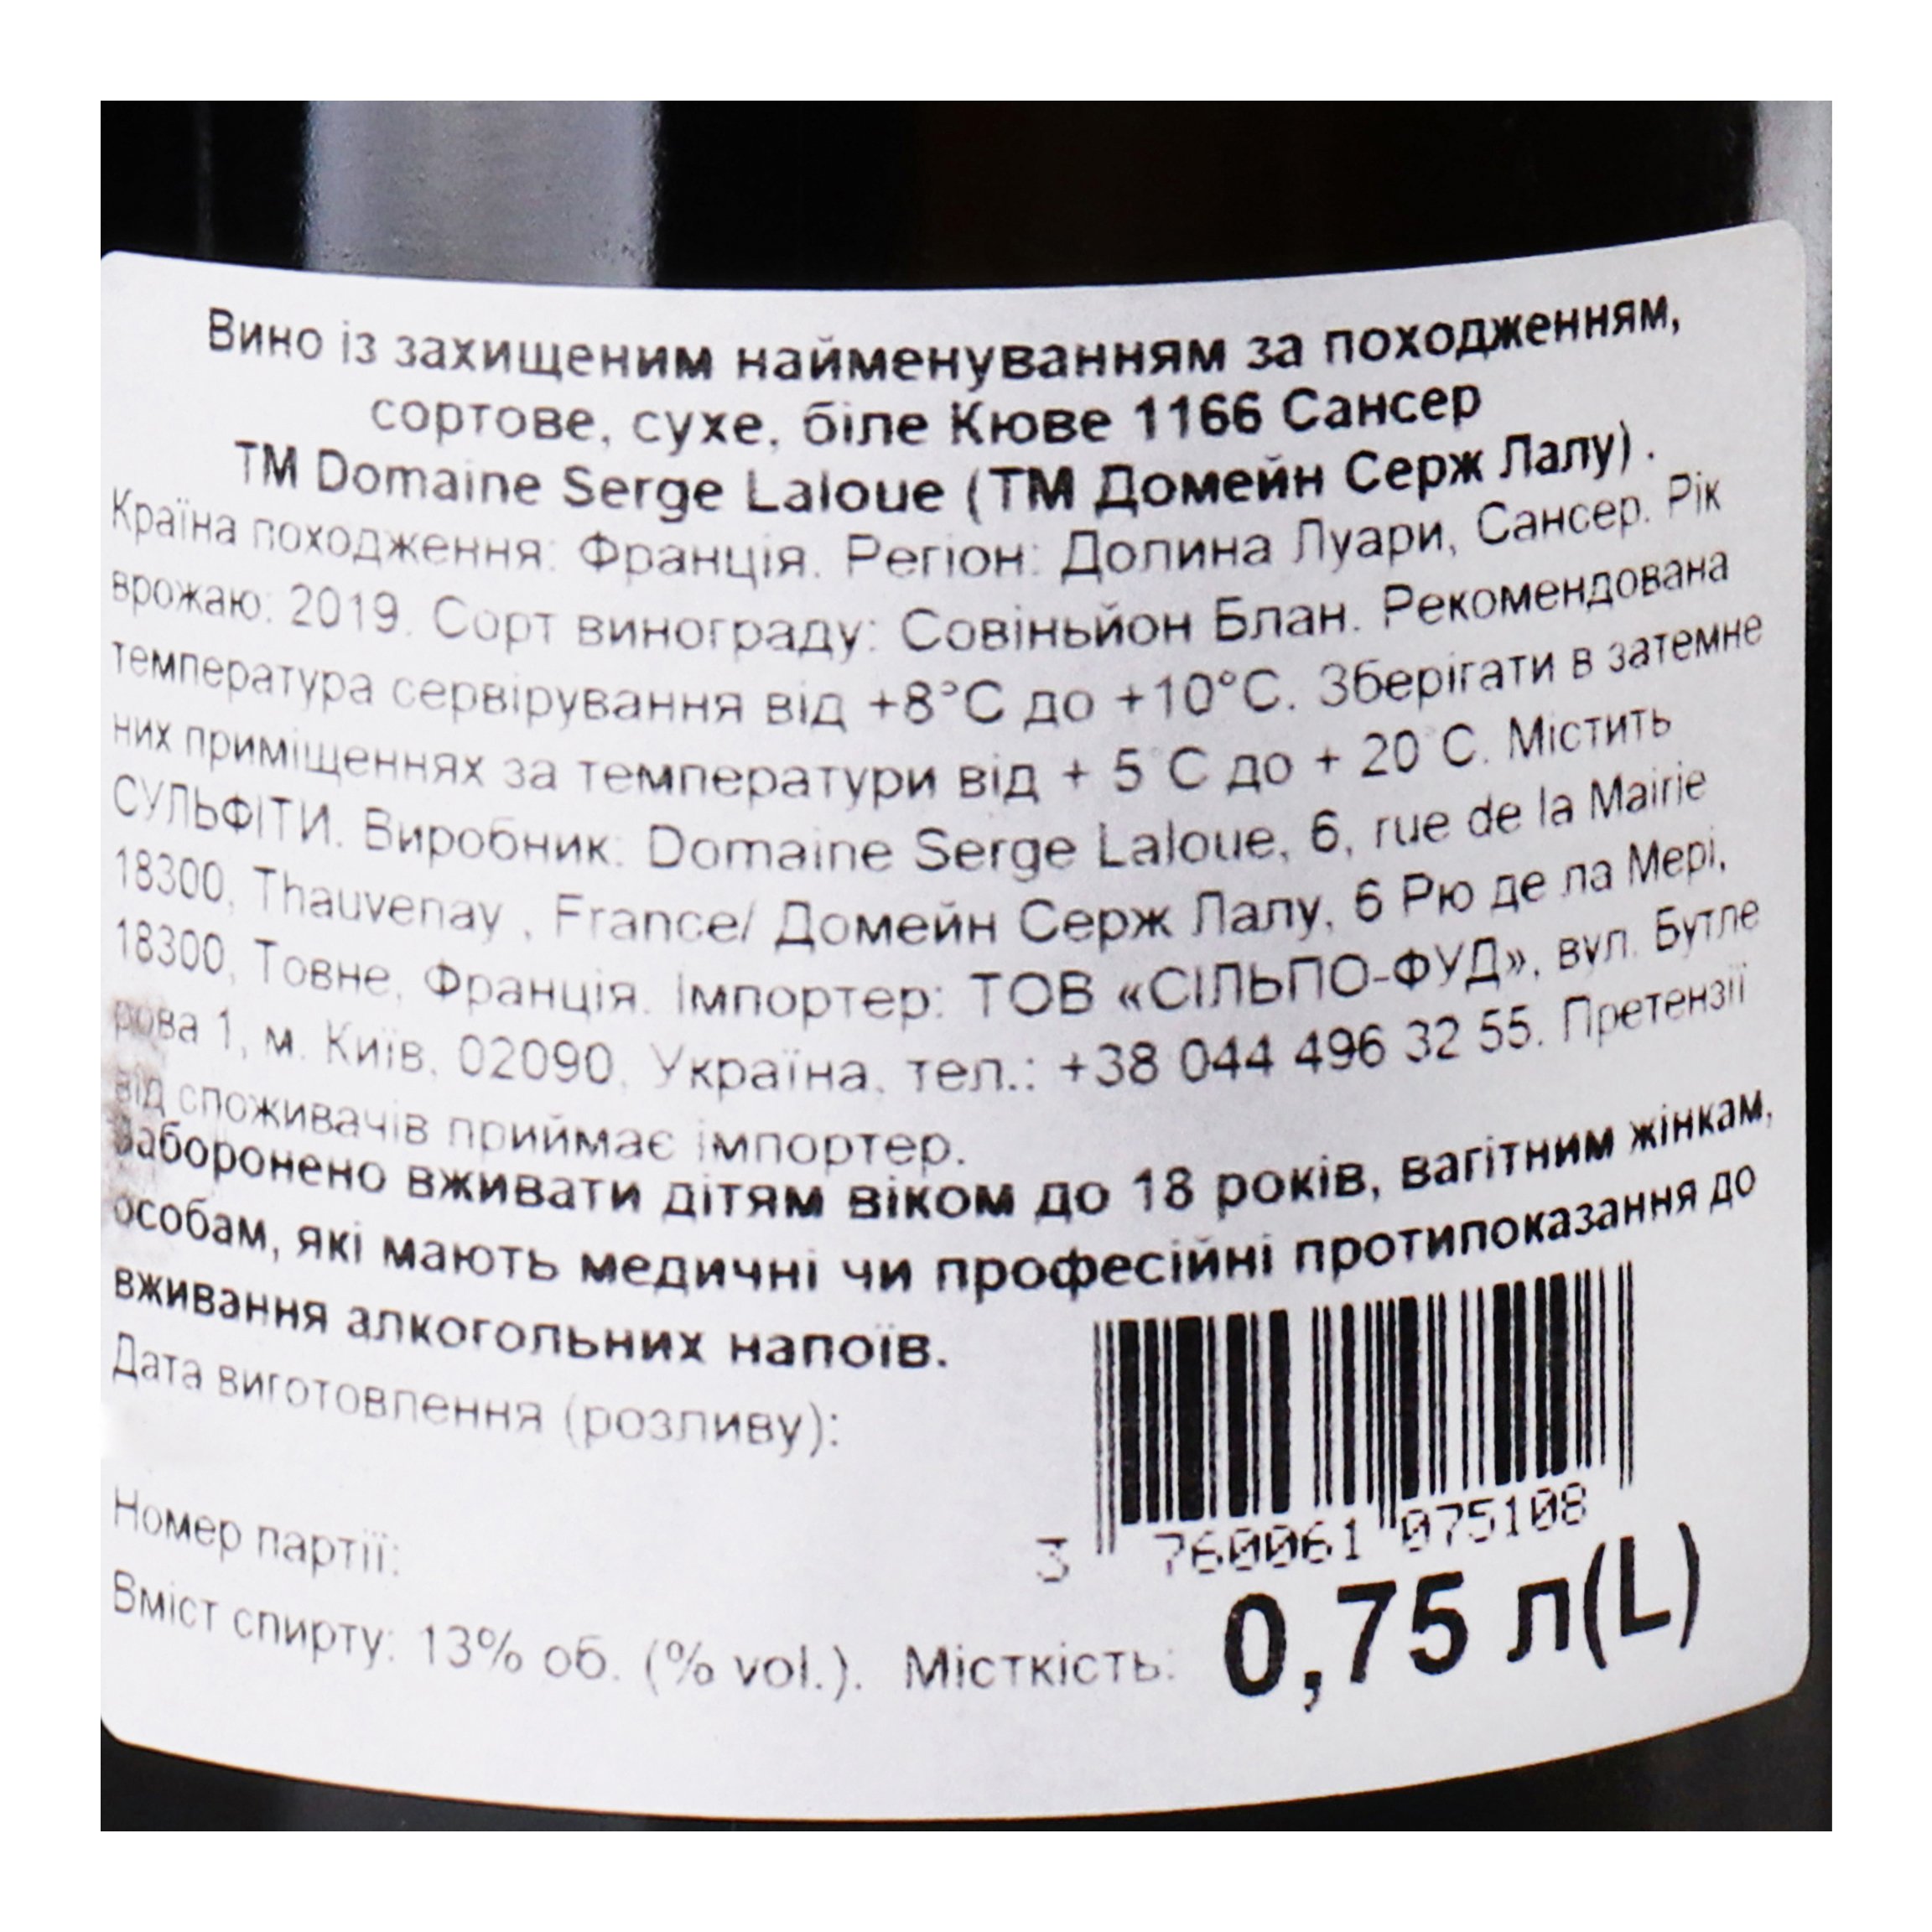 Вино Domaine Serge Laloue Sancerre Cuvee 1166, 2019 AOC, белое, сухое, 13%, 0,75 л (688967) - фото 5